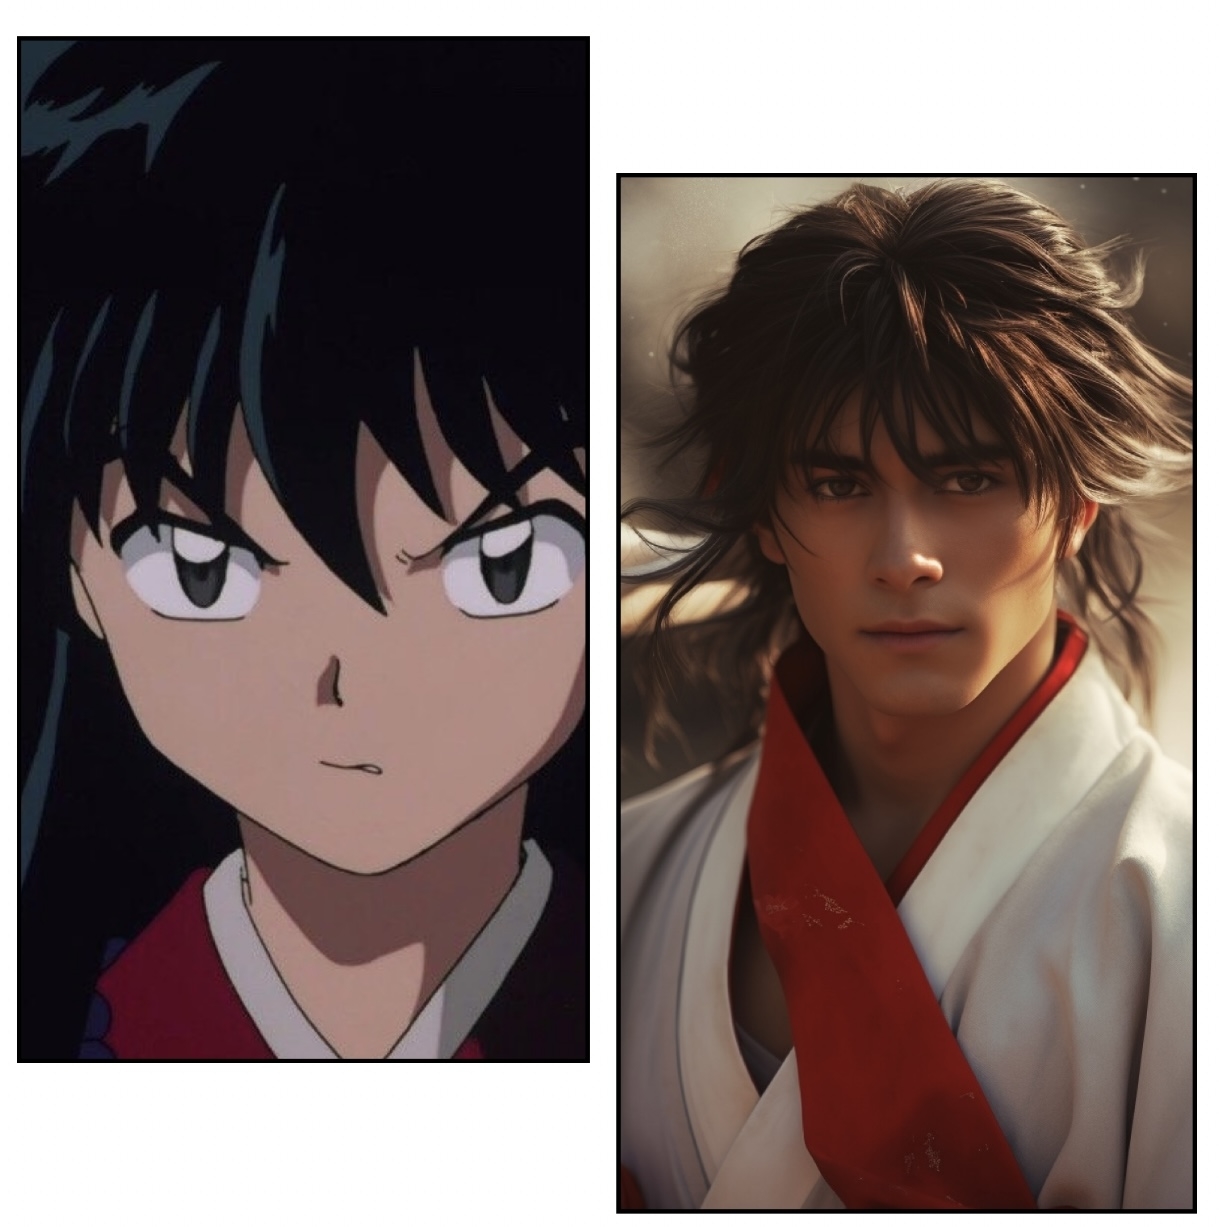 real people who look like anime characters